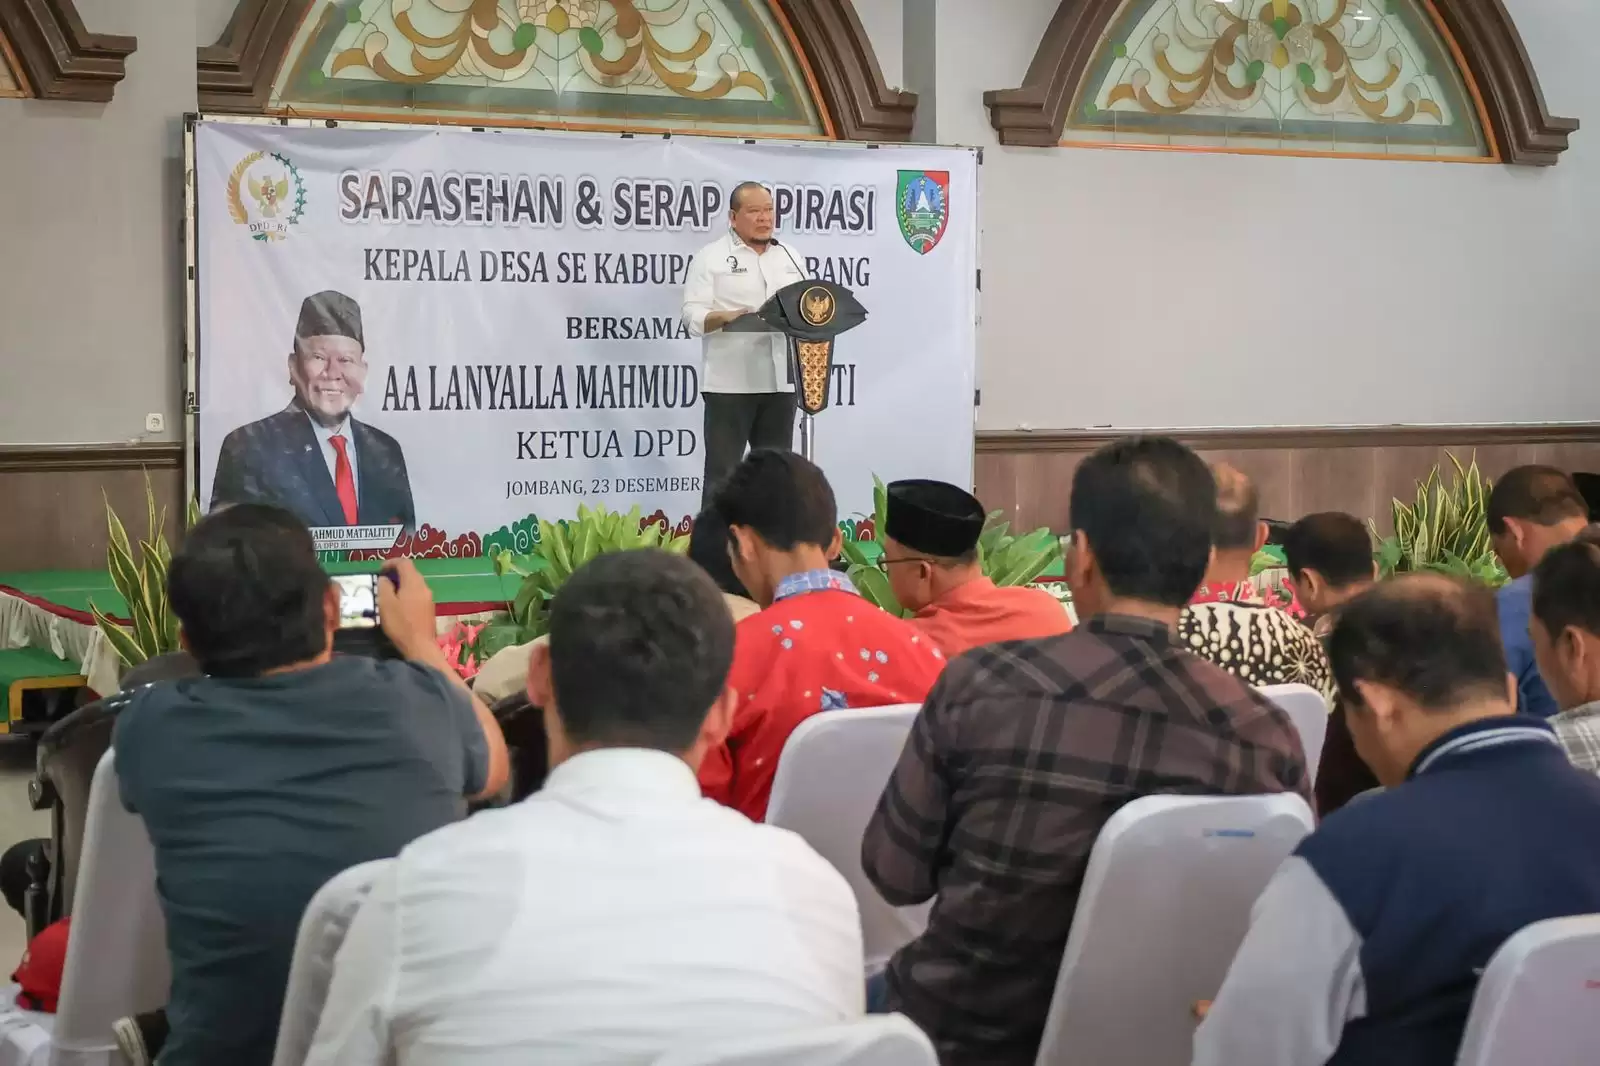 Ketua DPD RI, AA LaNyalla Mahmud Mattalitti dalam acara Sarasehan dan Serap Aspirasi Masyarakat Asosiasi Kepala Desa Kabupaten Jombang, Sabtu (23/12) (Foto: Dok DPD)